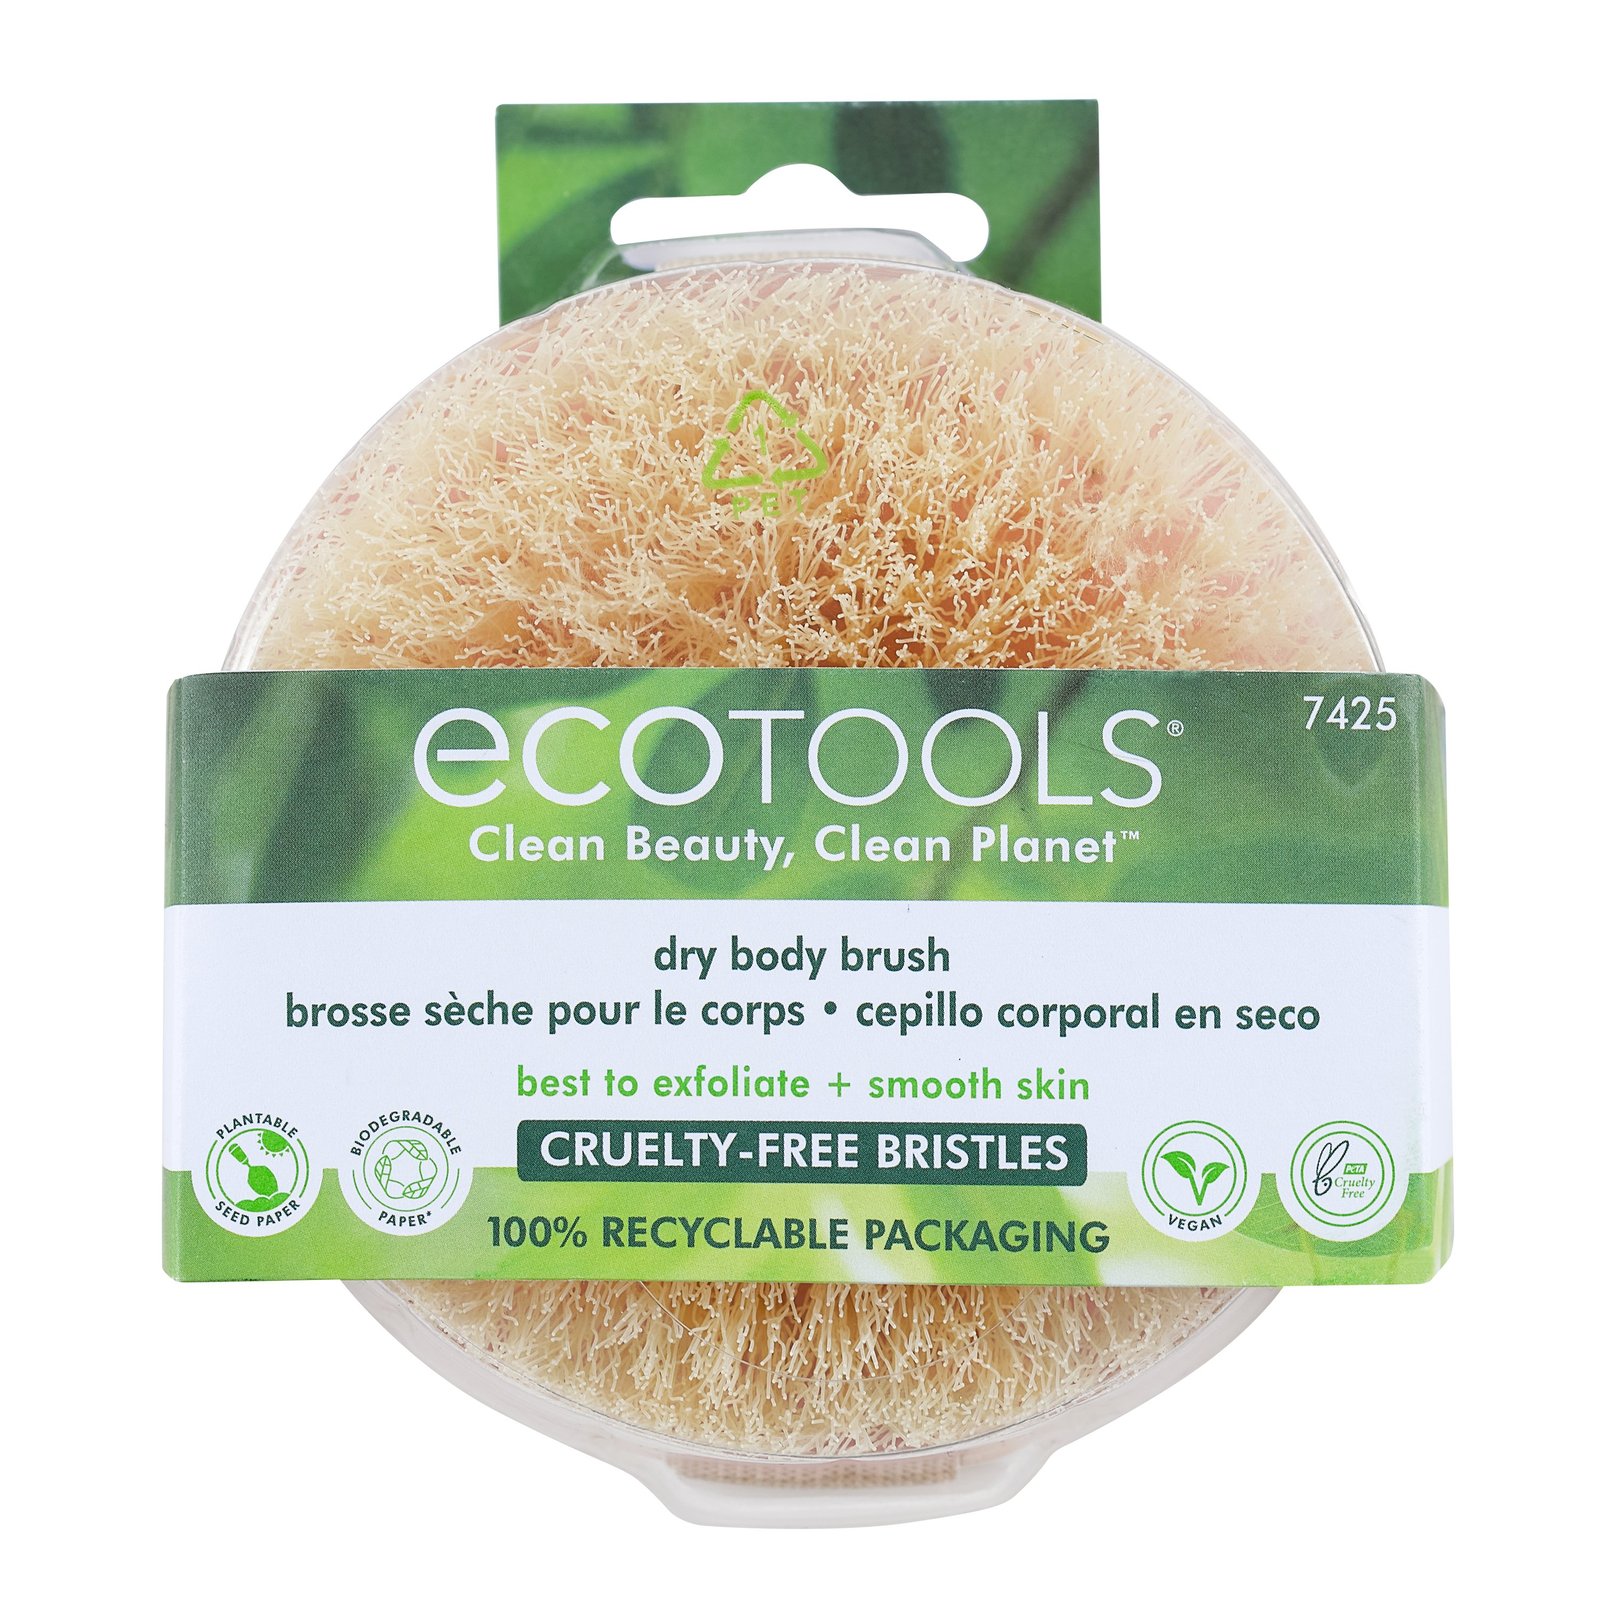 Ecotools Dry Body Brush